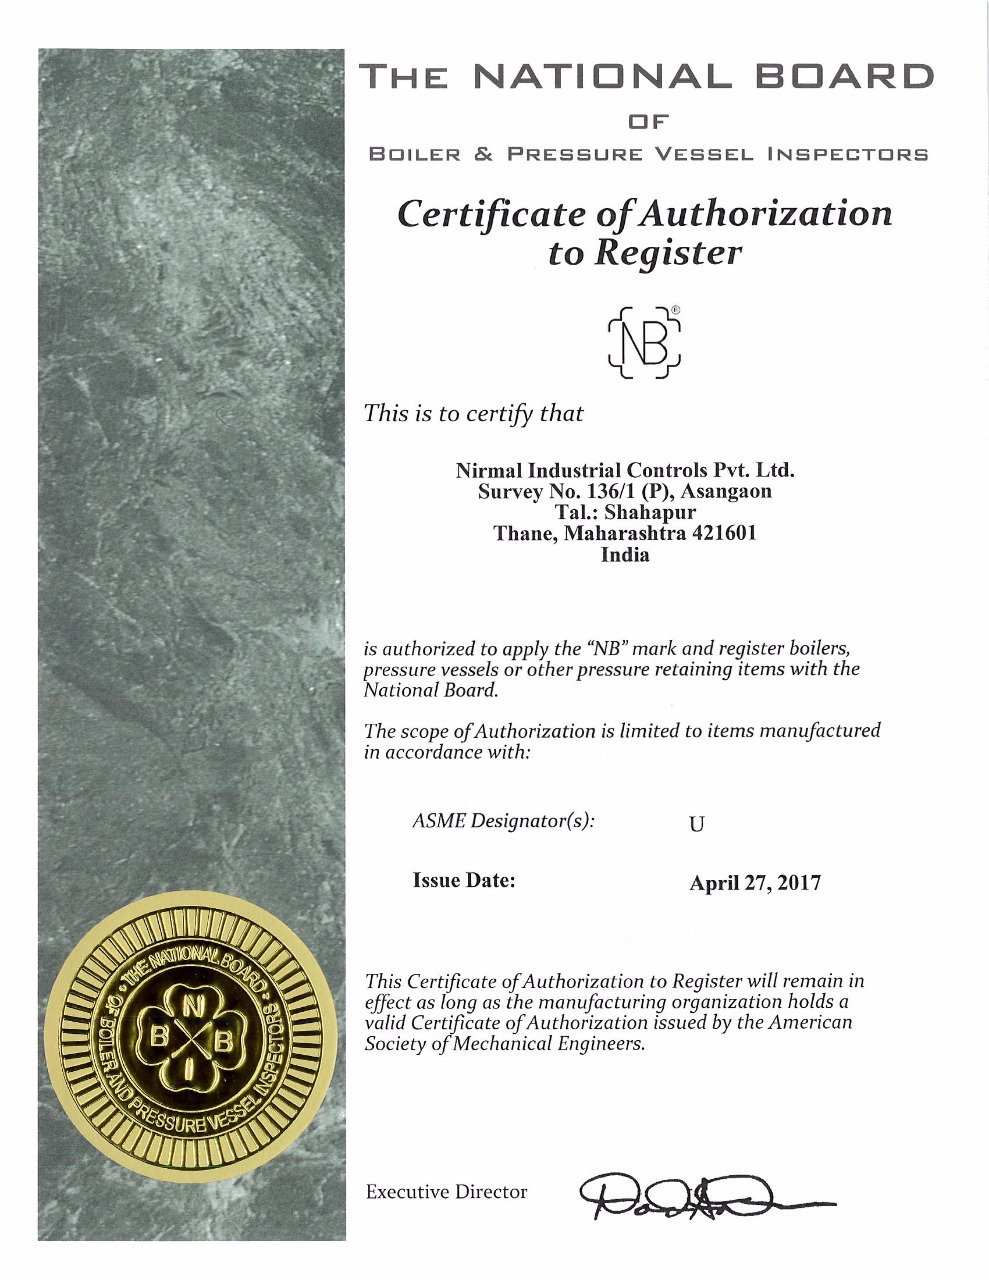 U & R Stamp Certification